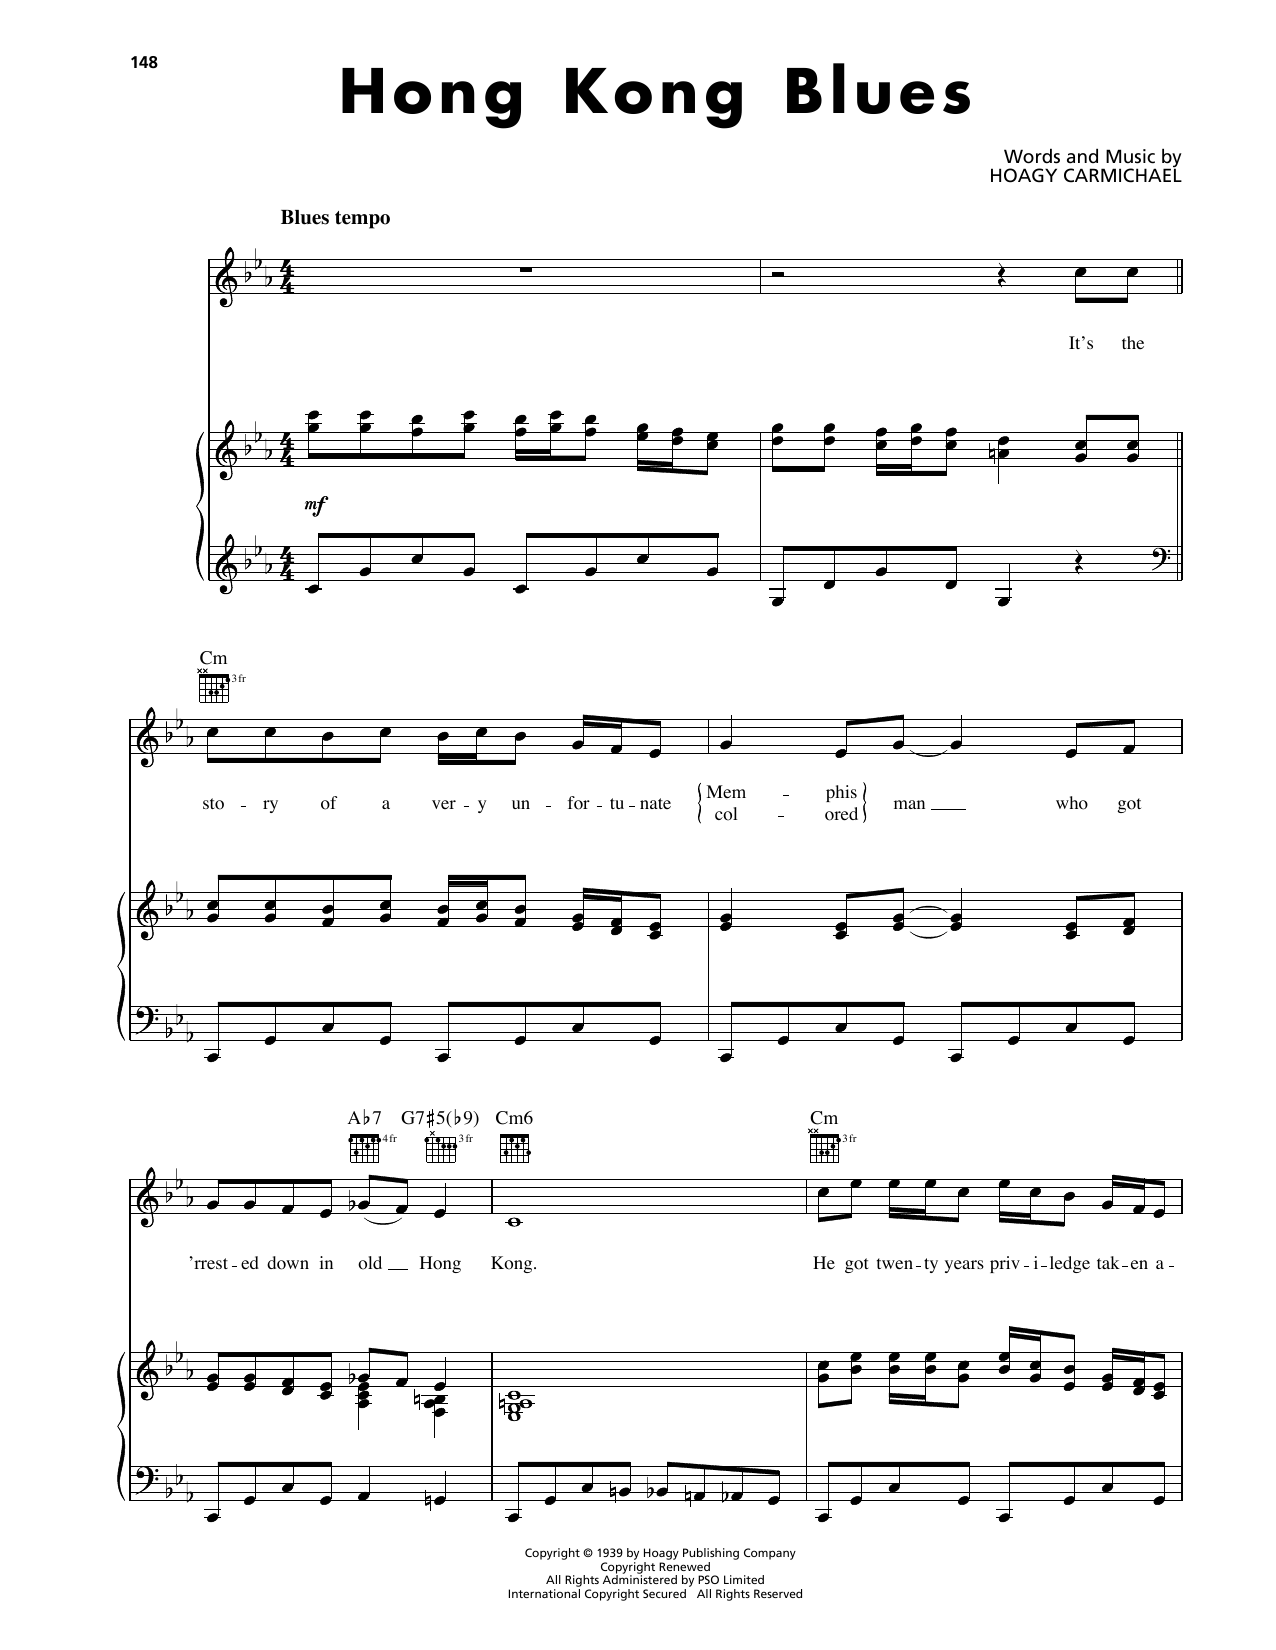 Hoagy Carmichael Hong Kong Blues Sheet Music Notes & Chords for Piano, Vocal & Guitar Chords (Right-Hand Melody) - Download or Print PDF